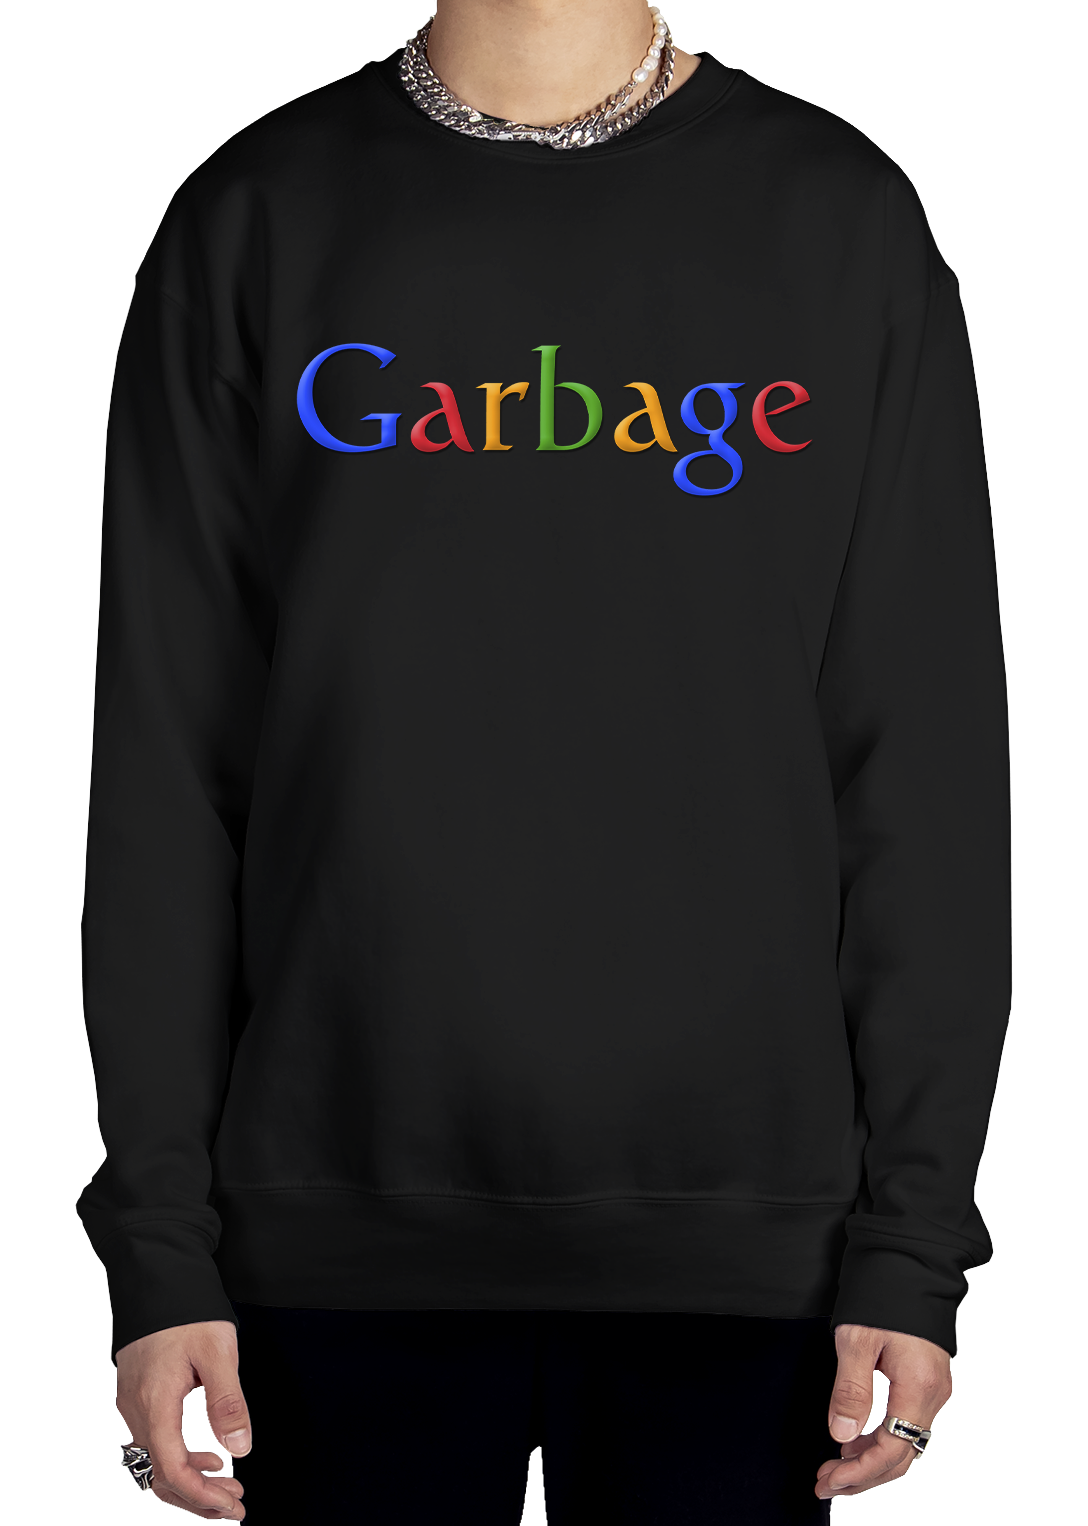 Garbage.com Sweatshirt